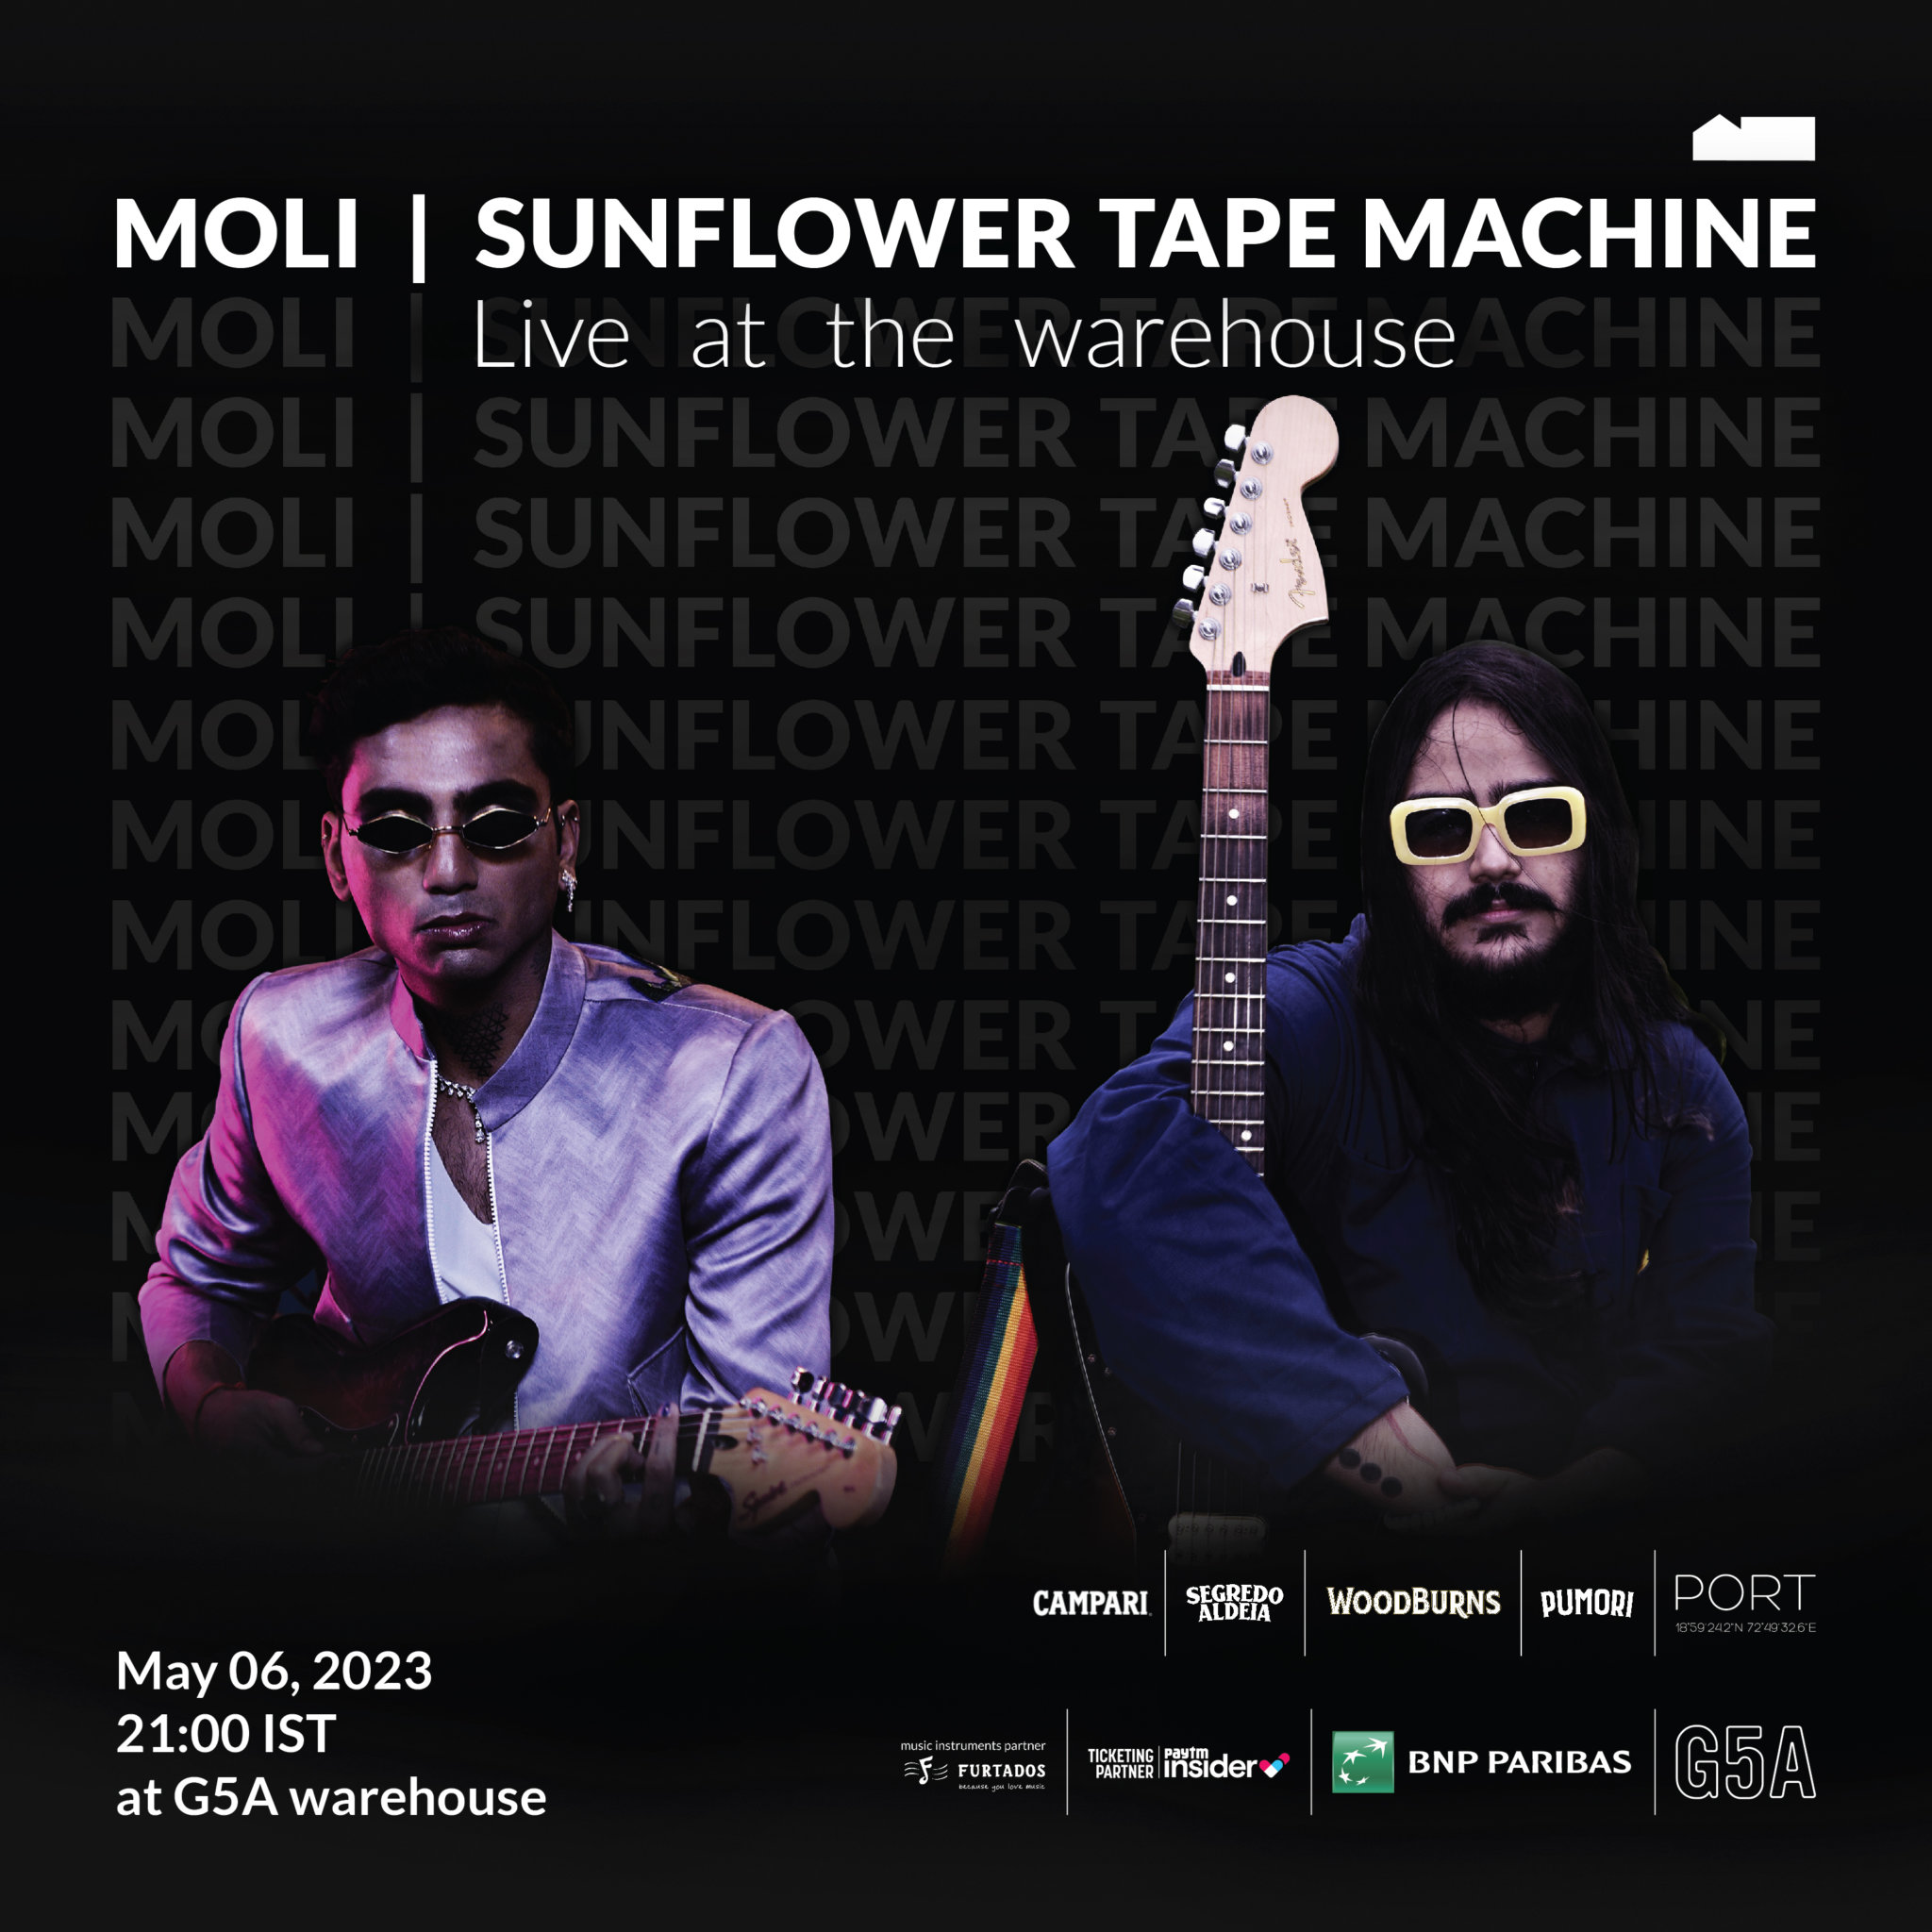 Moli | Sunflower Tape Machine Live at the warehouse